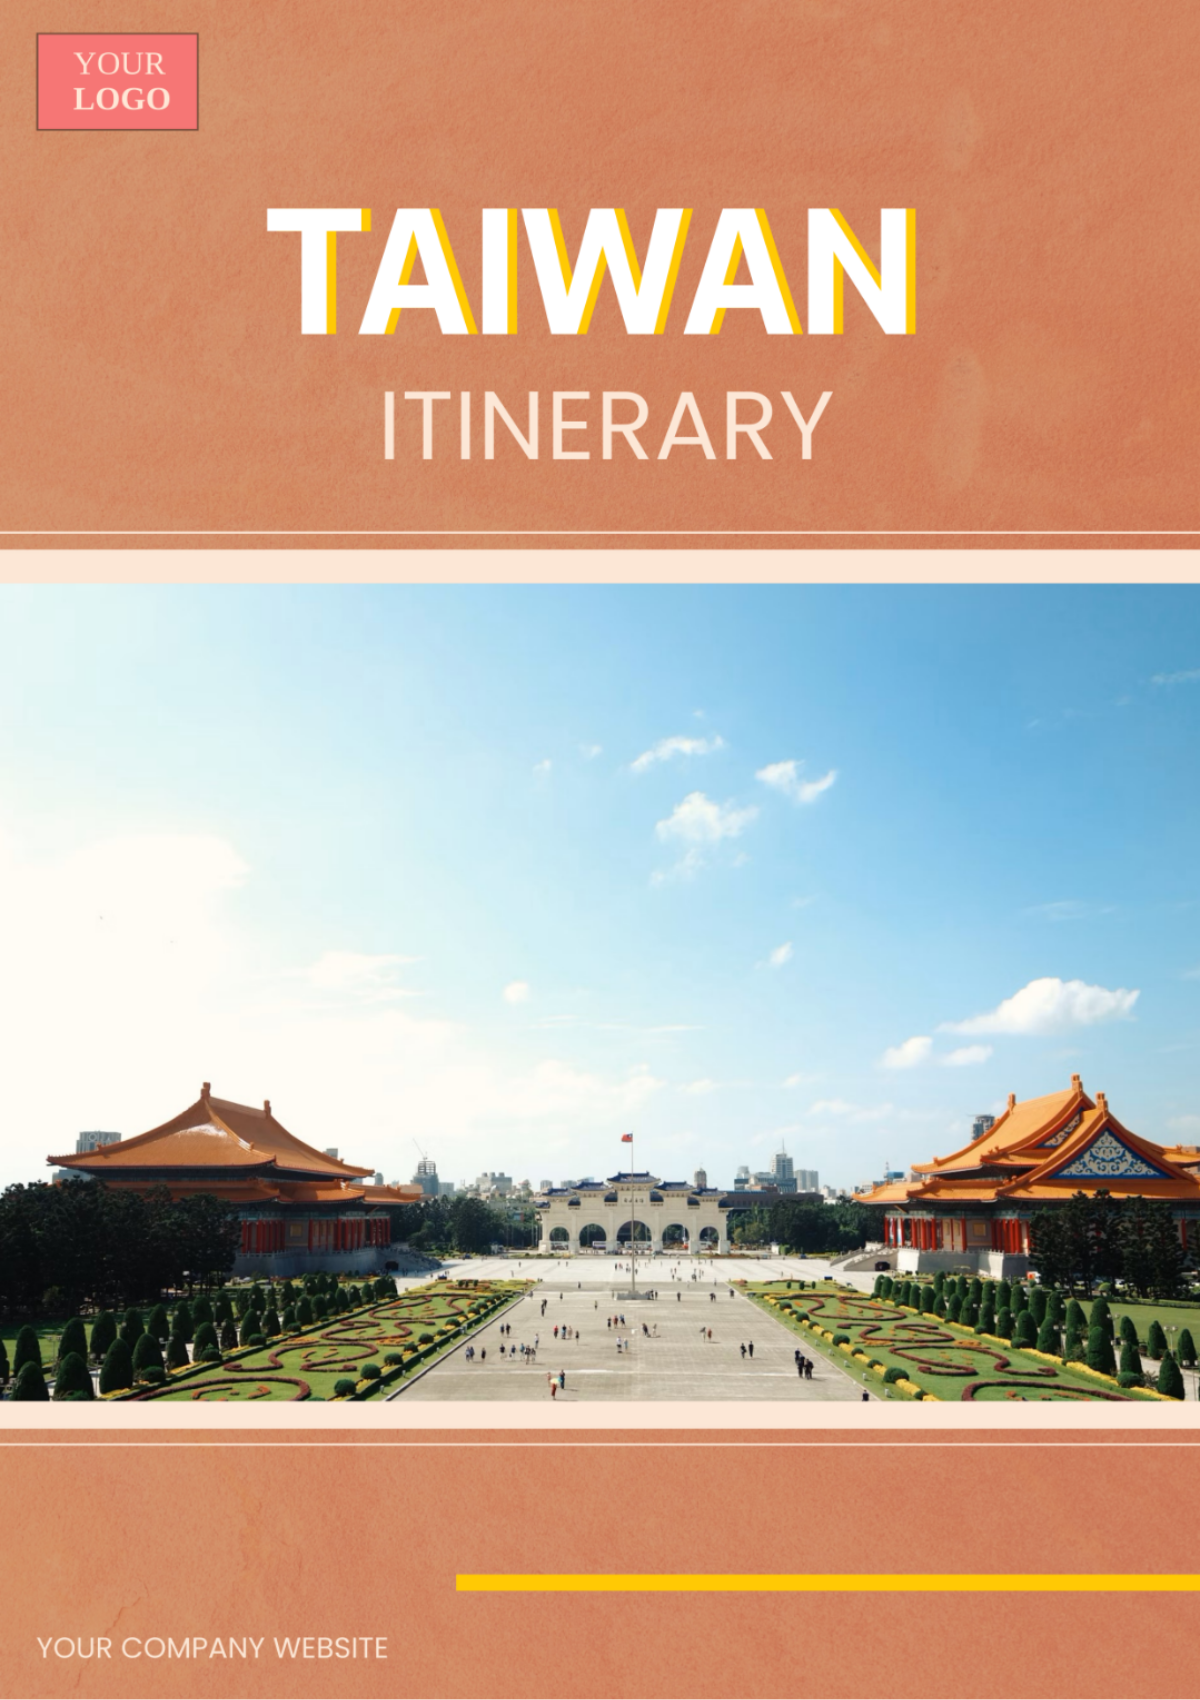 Free Taiwan Travel Itinerary Template